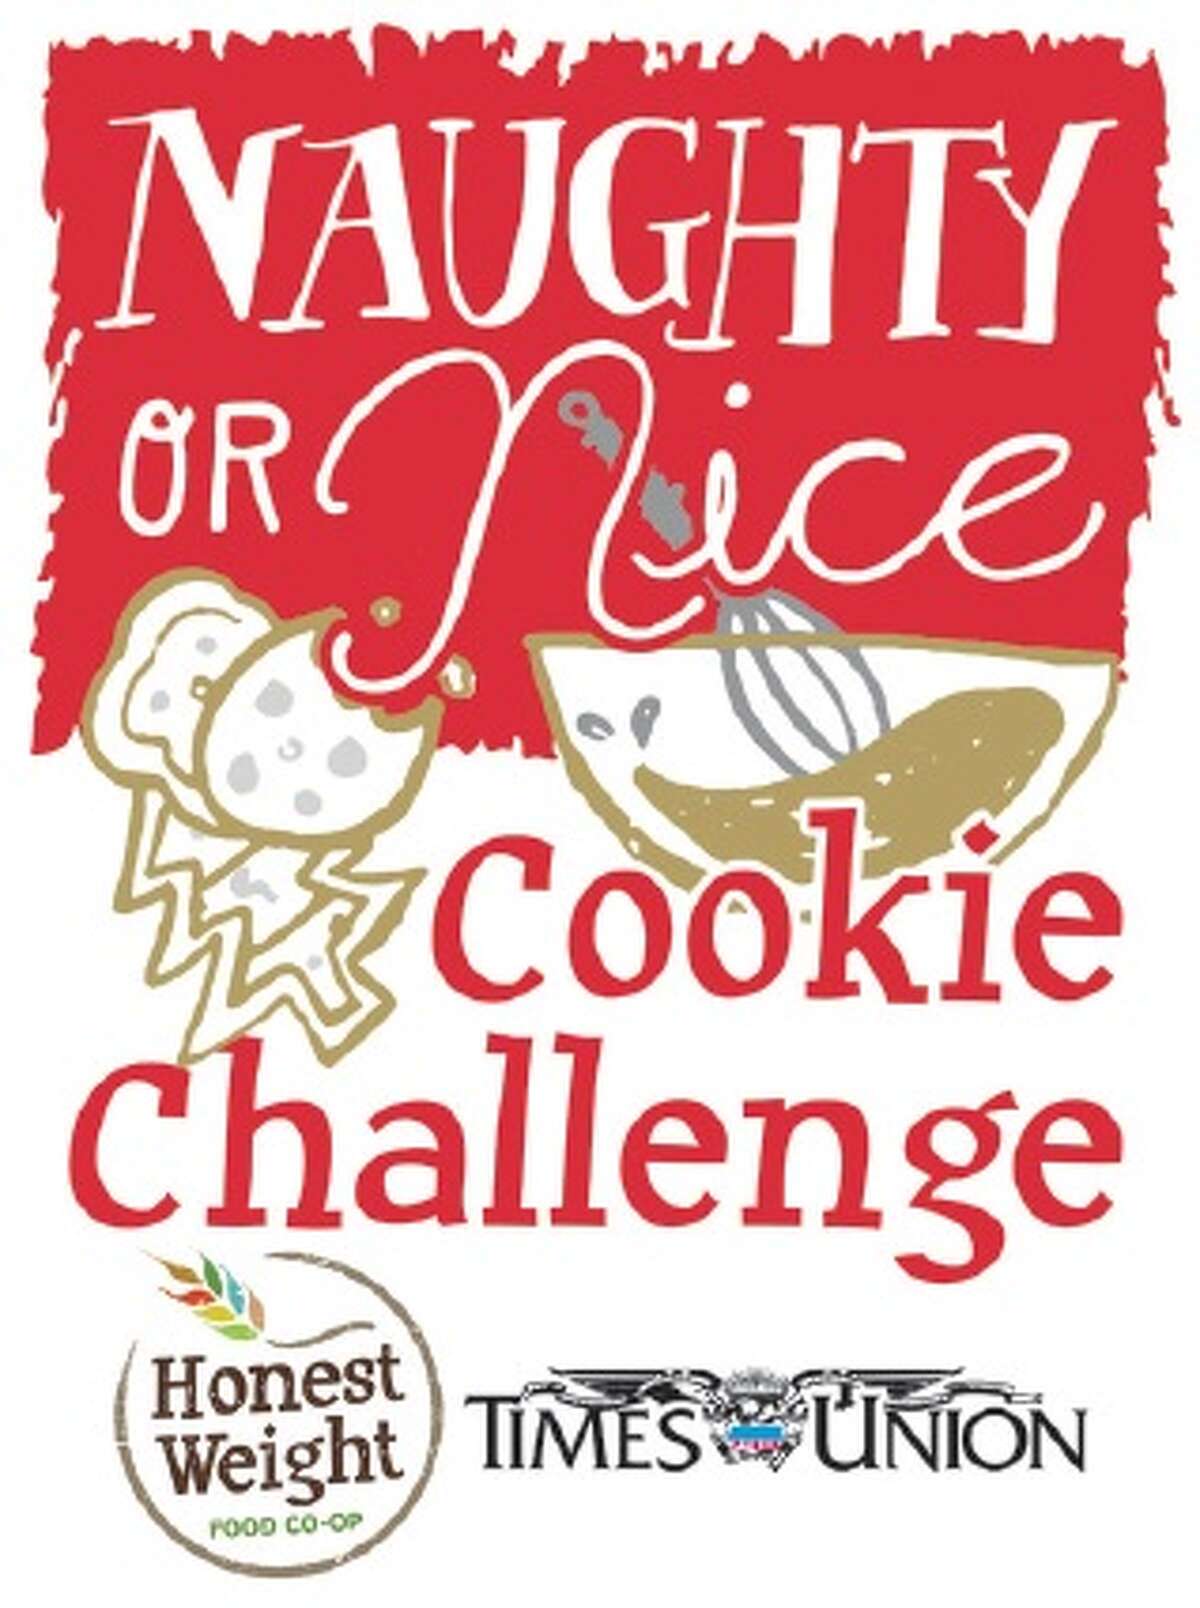 Naughty or Nice Cookie Challenge logo.